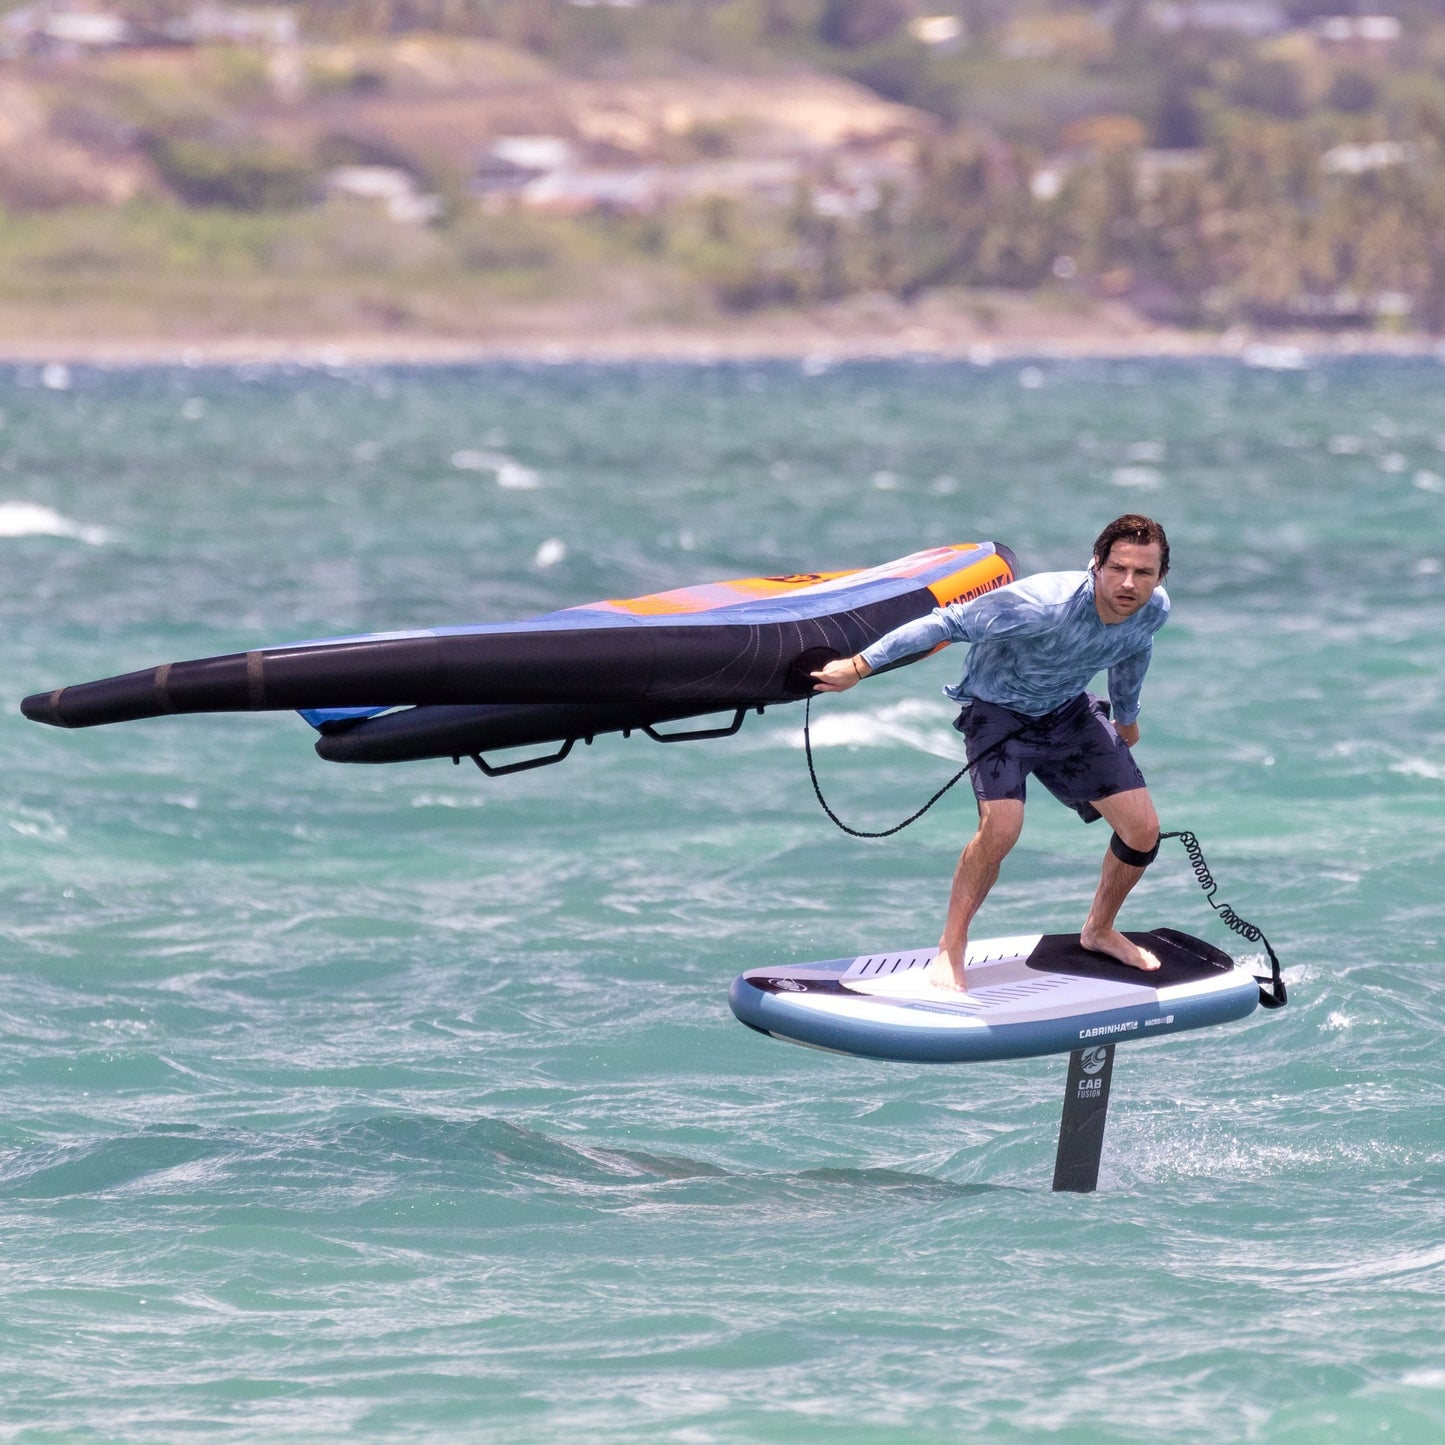 Cabrinha Macro Air Inflatable Wingfoil Board